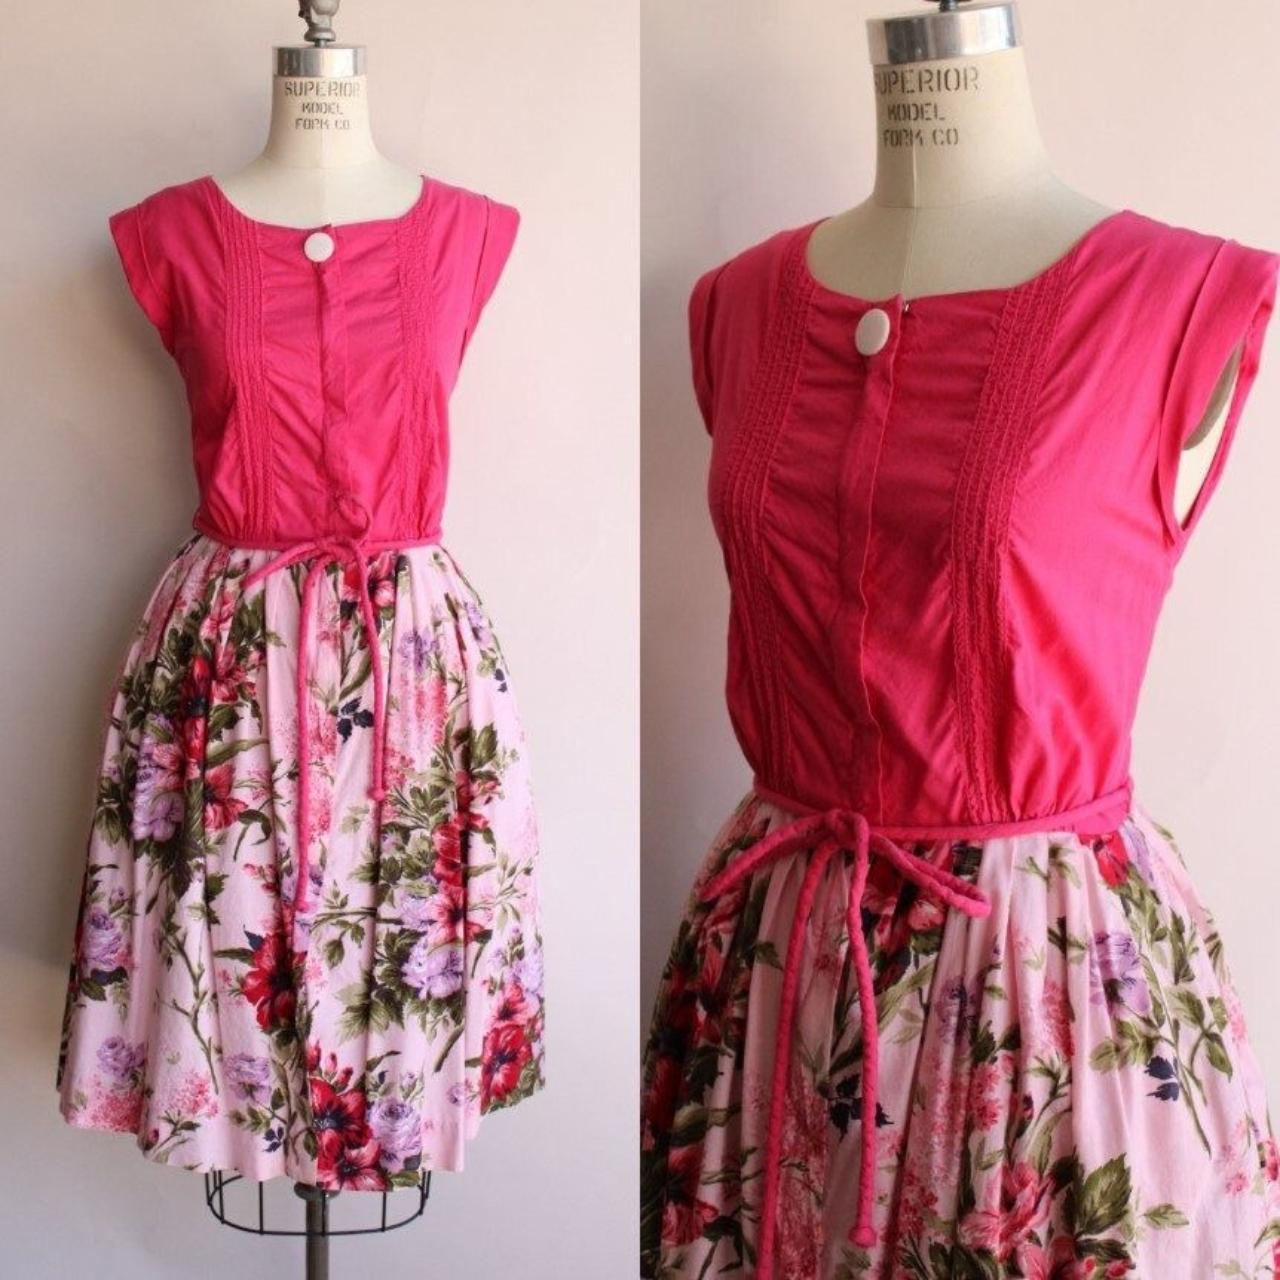 Charming vintage pink floral print dress from the... - Depop